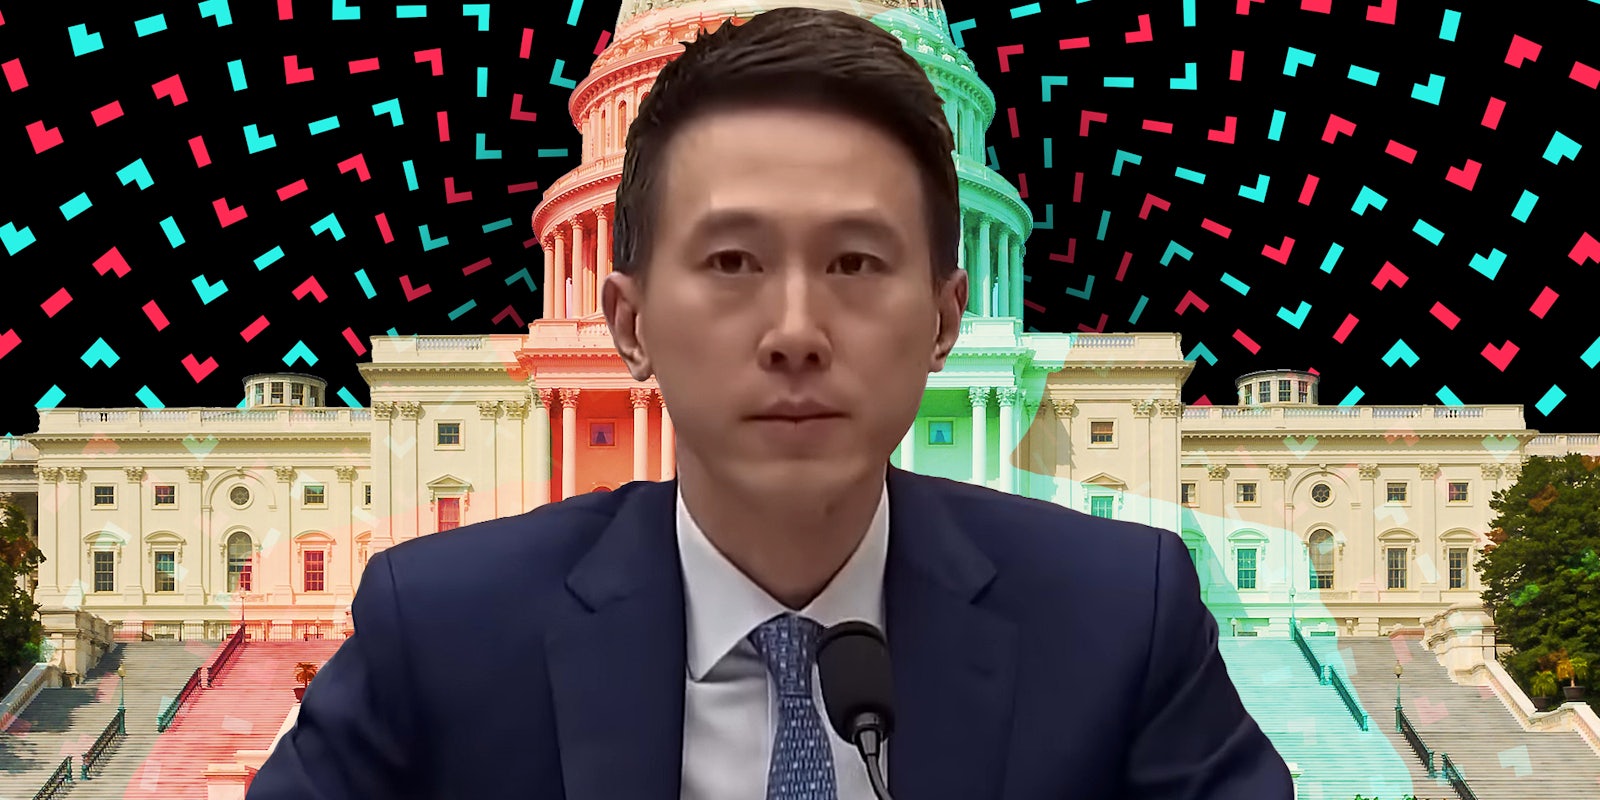 TikTok CEO Shou Chew over Capitol building and TikTok background